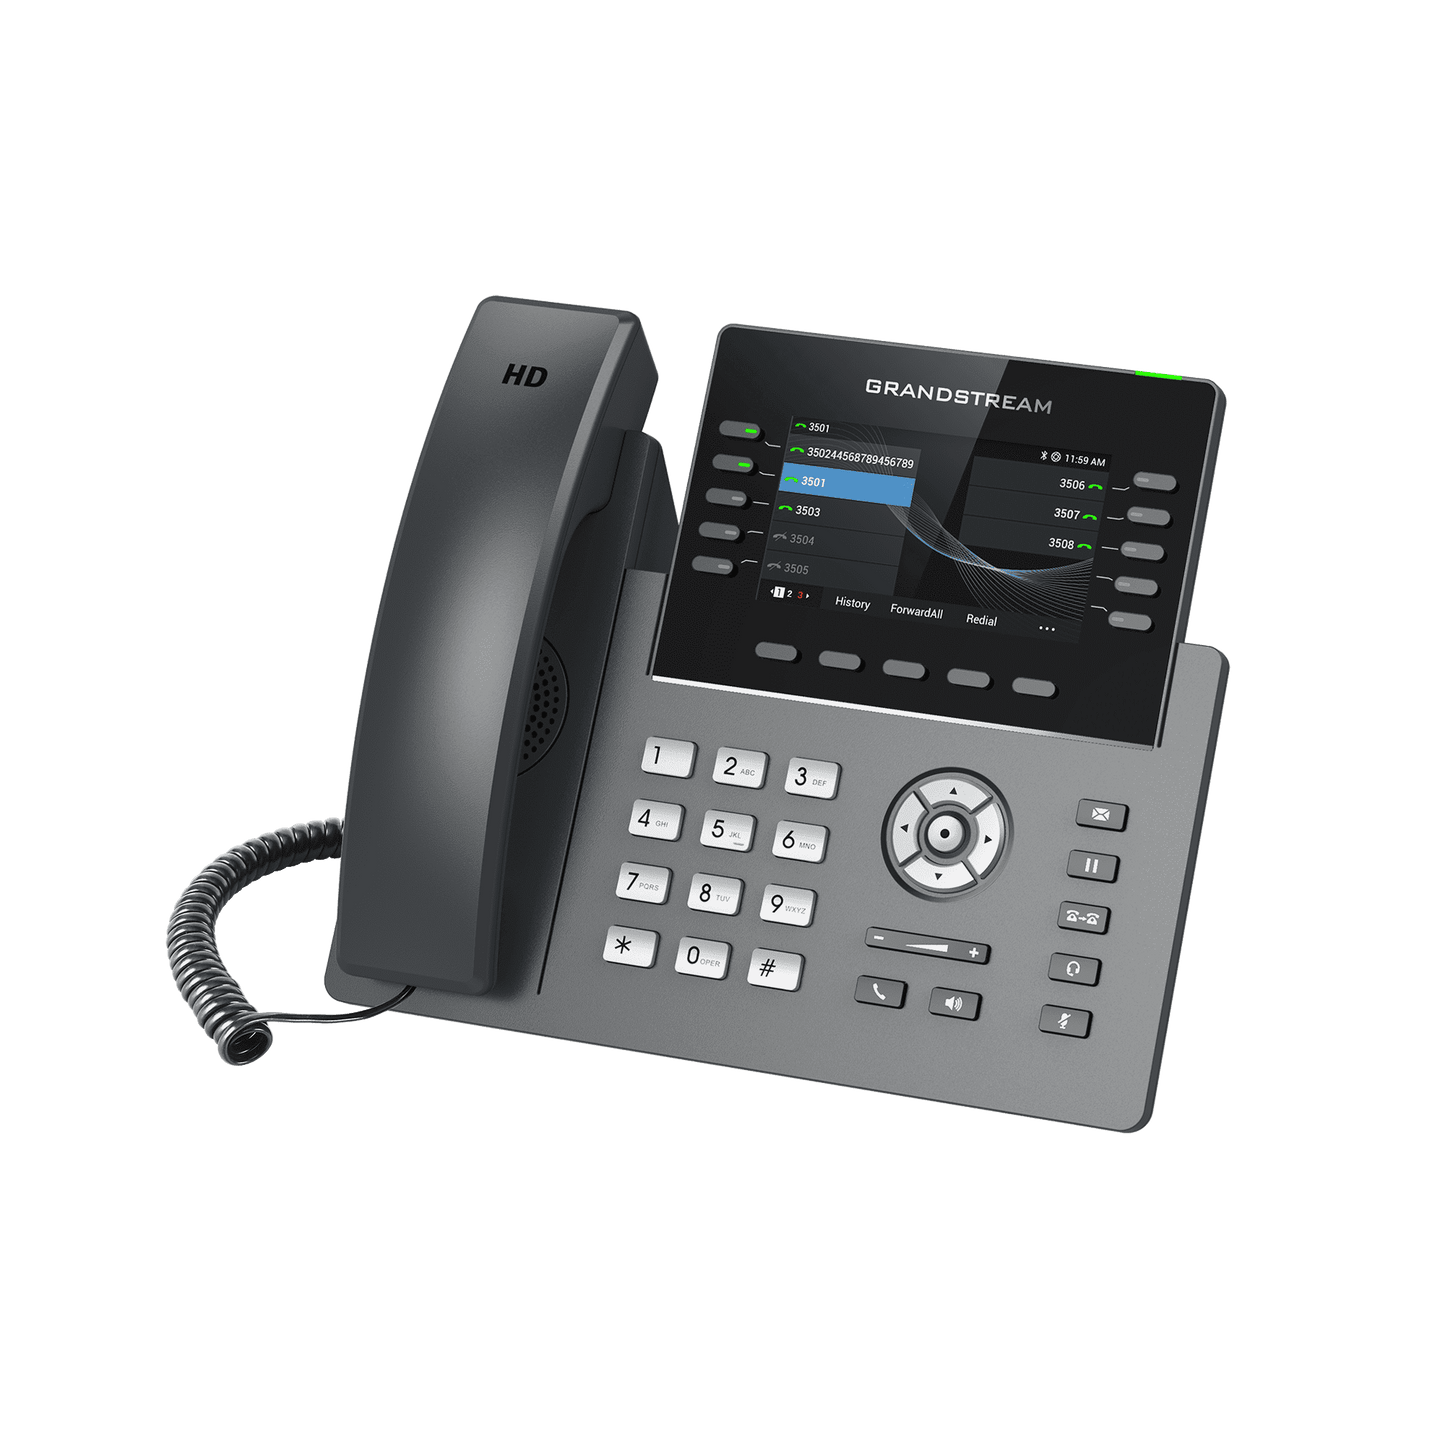 GRP2615 - Premium  from Vanilla Telecoms Ltd. - Just €227.15! Shop now at Vanilla Telecoms Ltd.